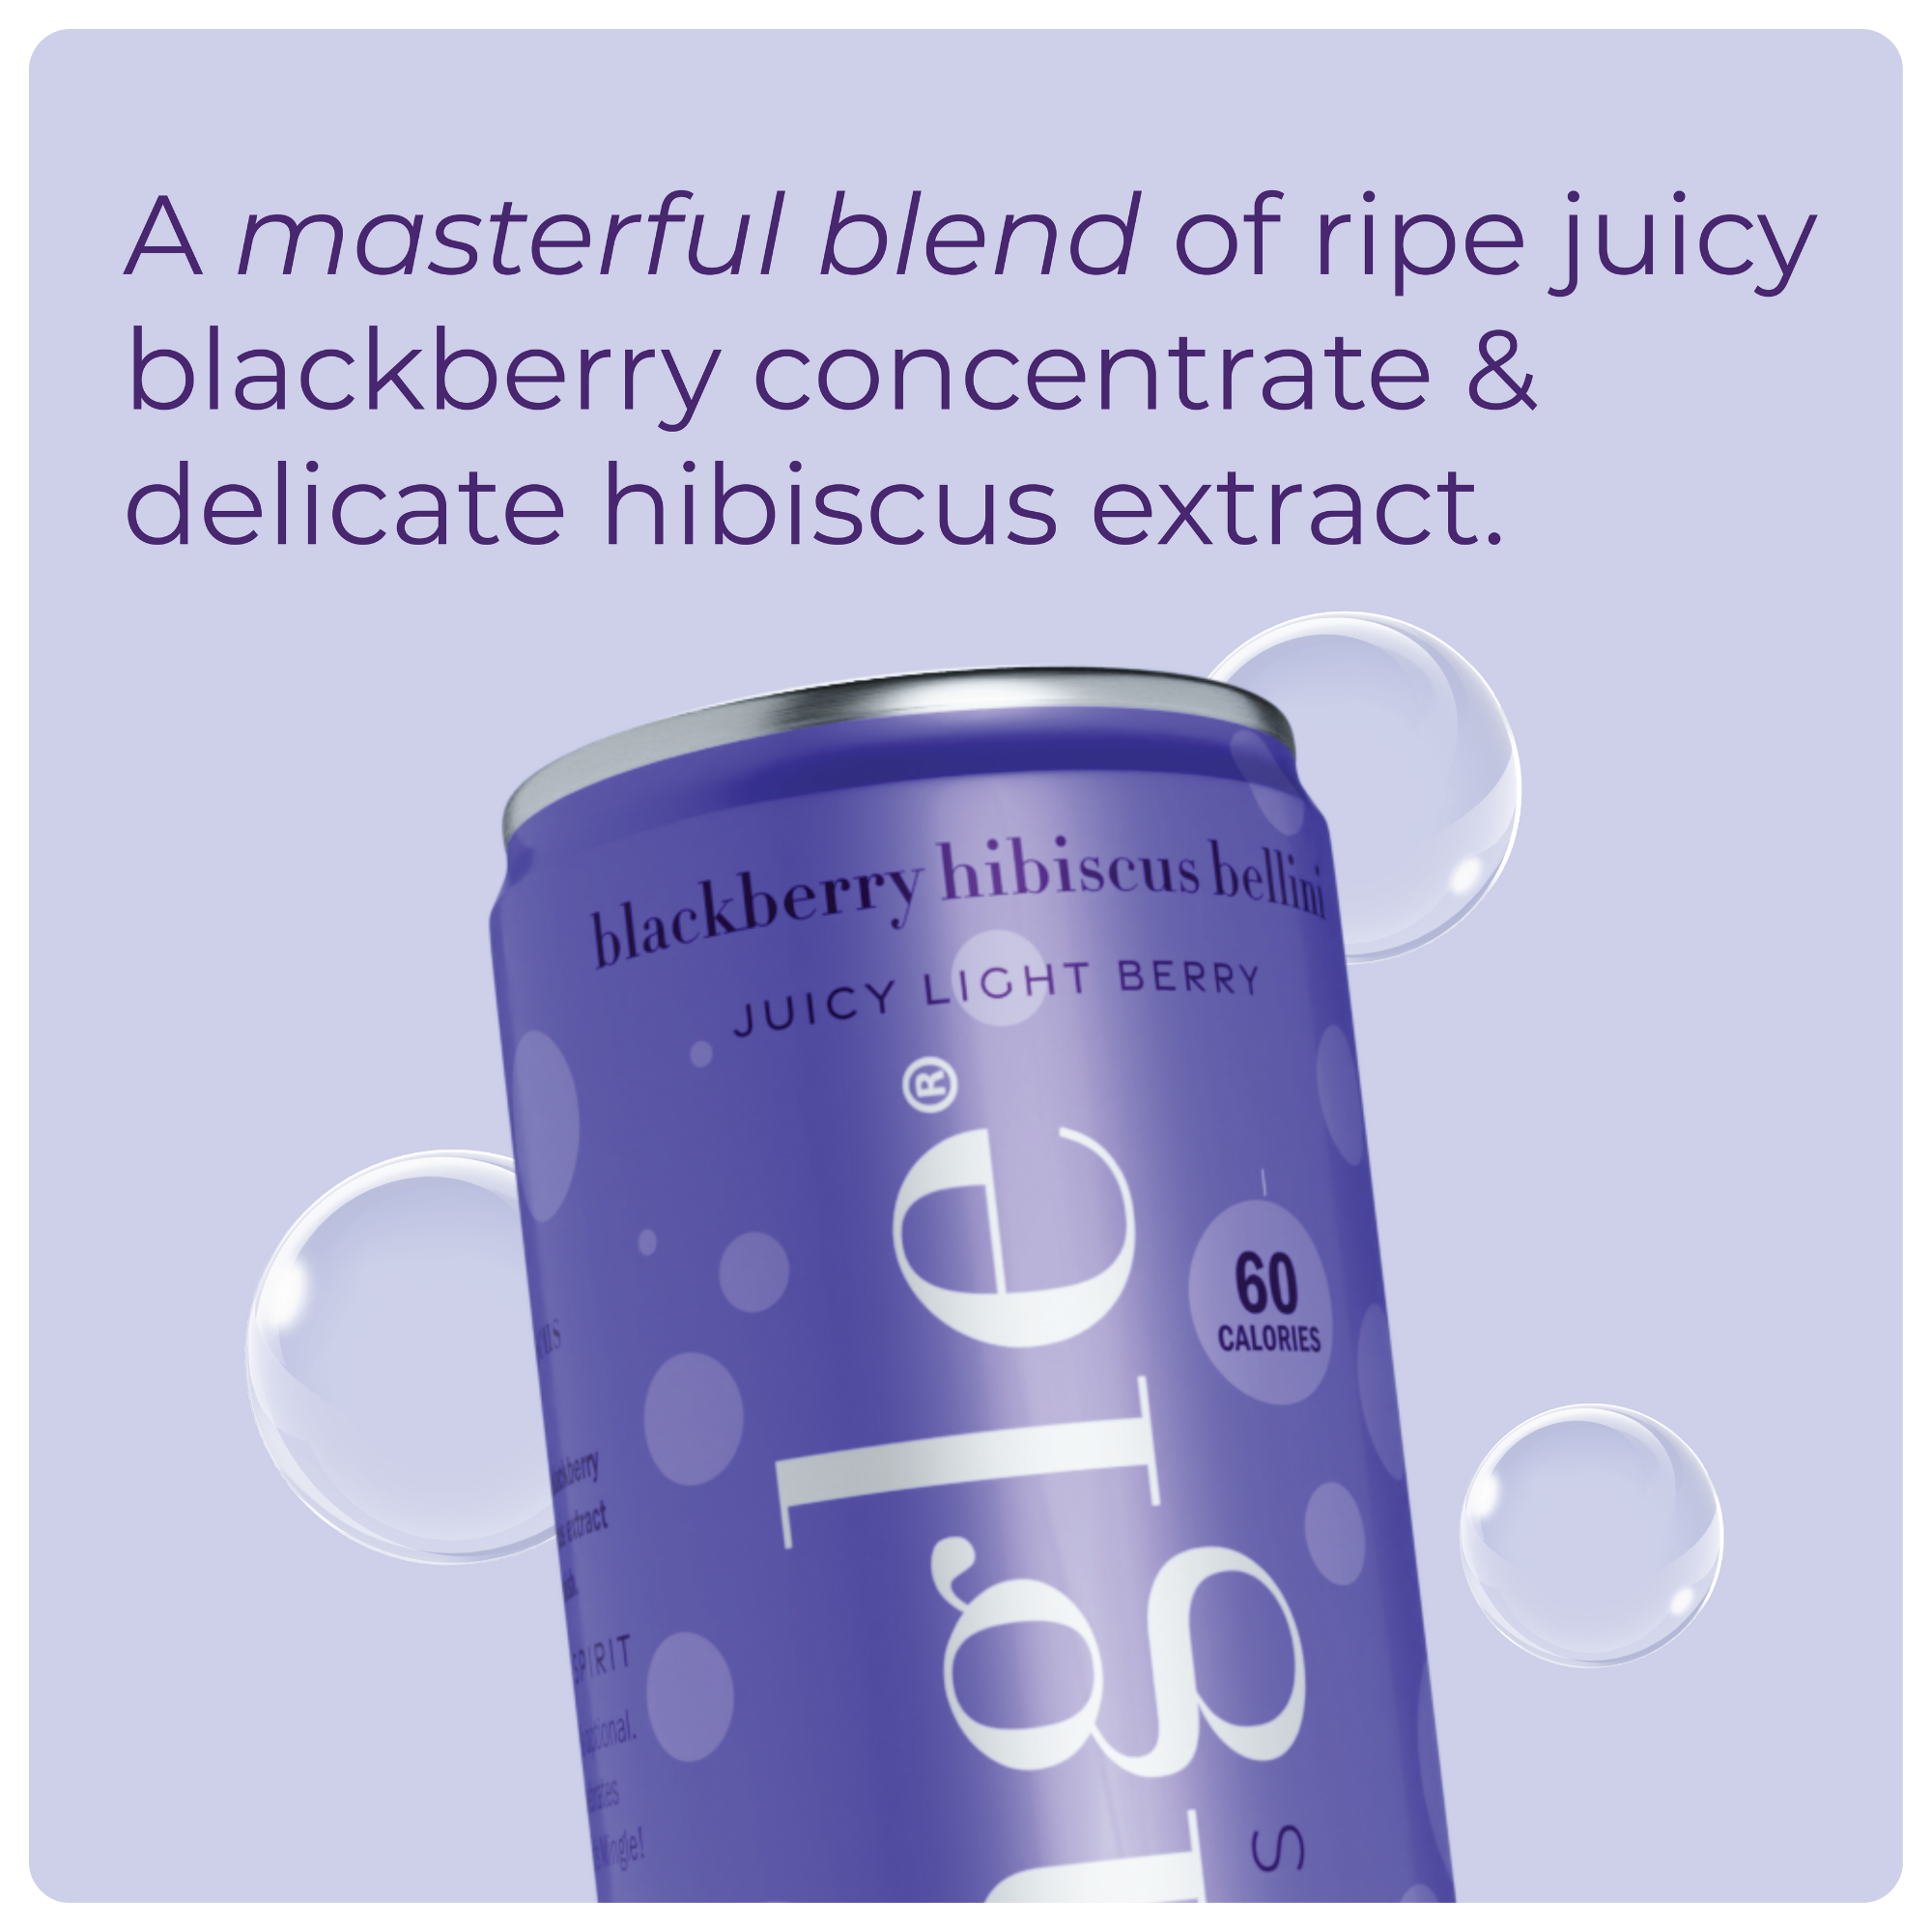 Blackberry Hibiscus Bellini